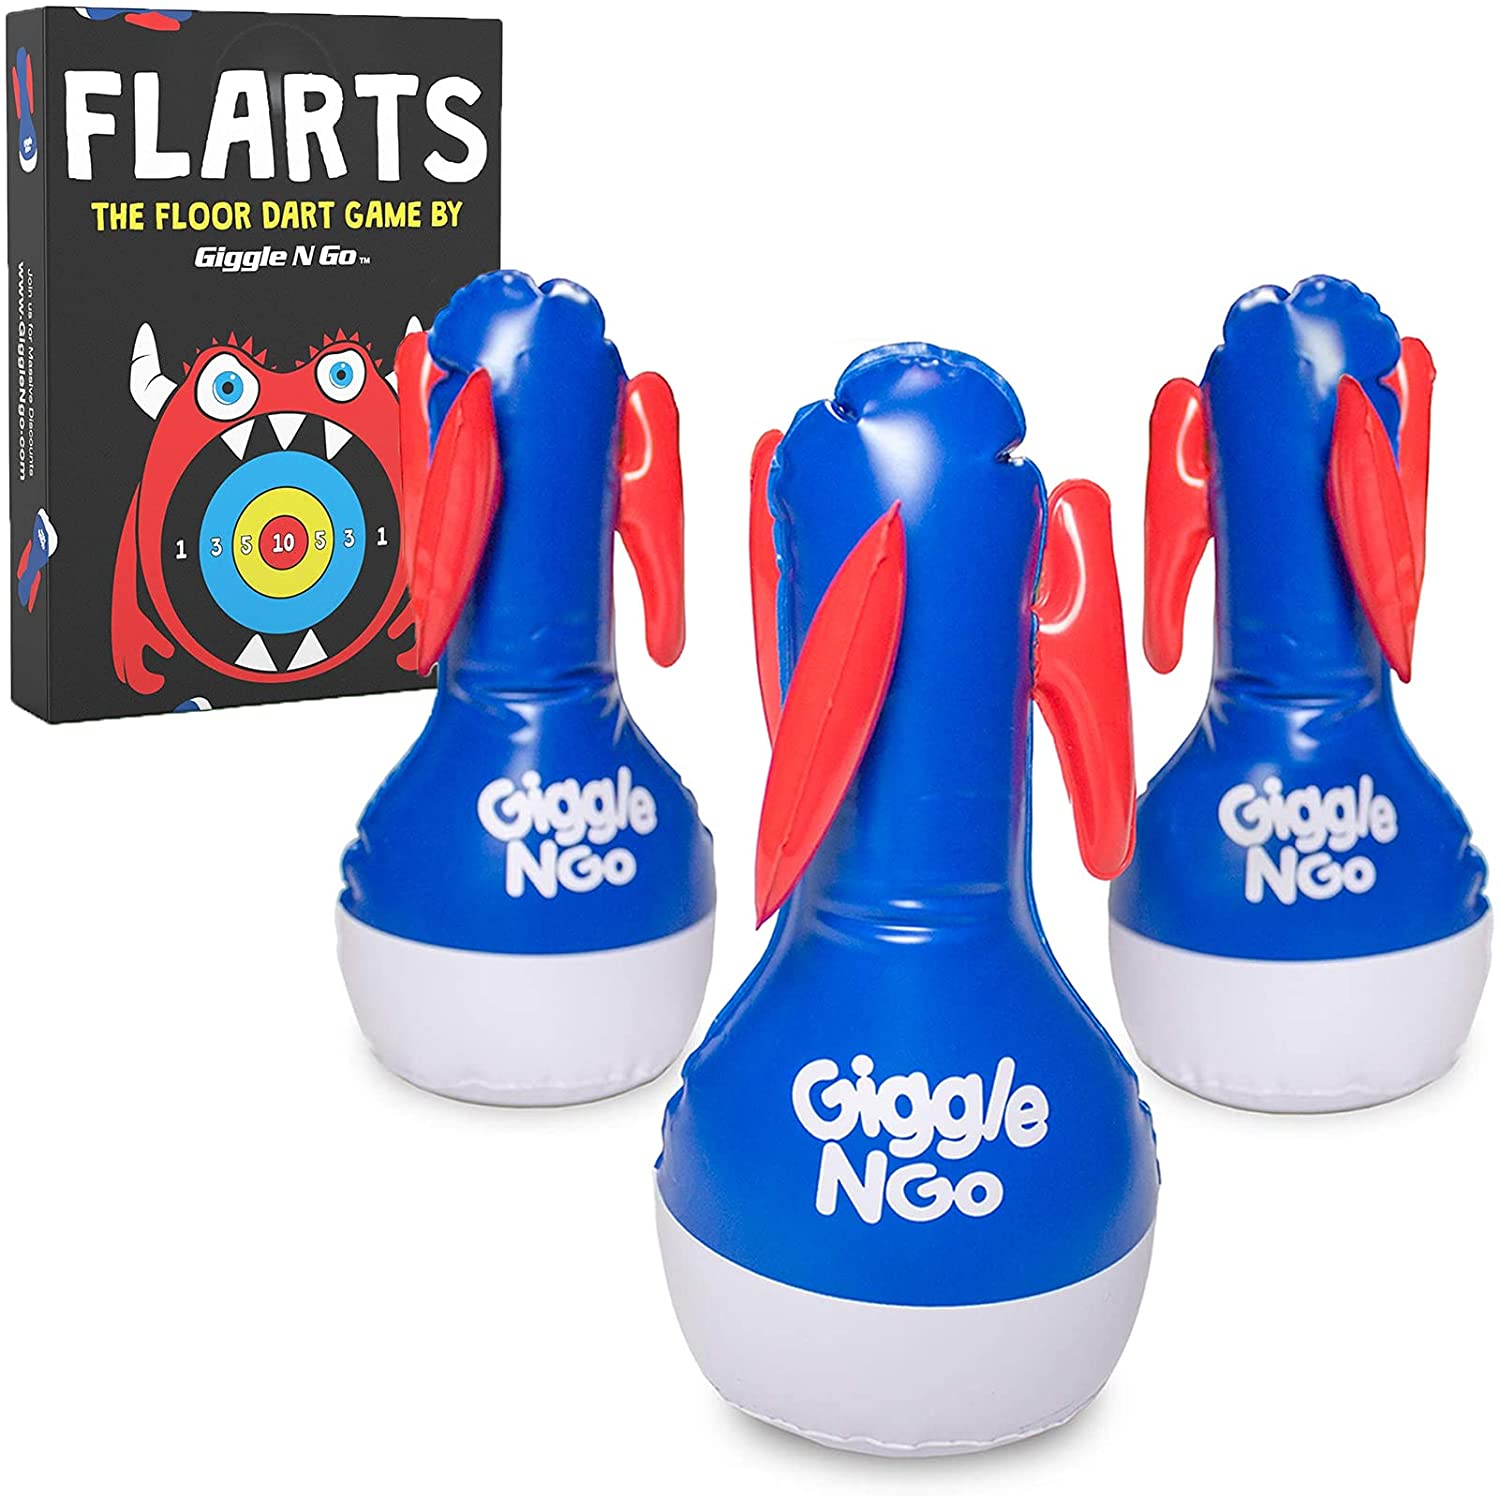 GIGGLE N GO Inflatable Flarts Yard Game For Kids